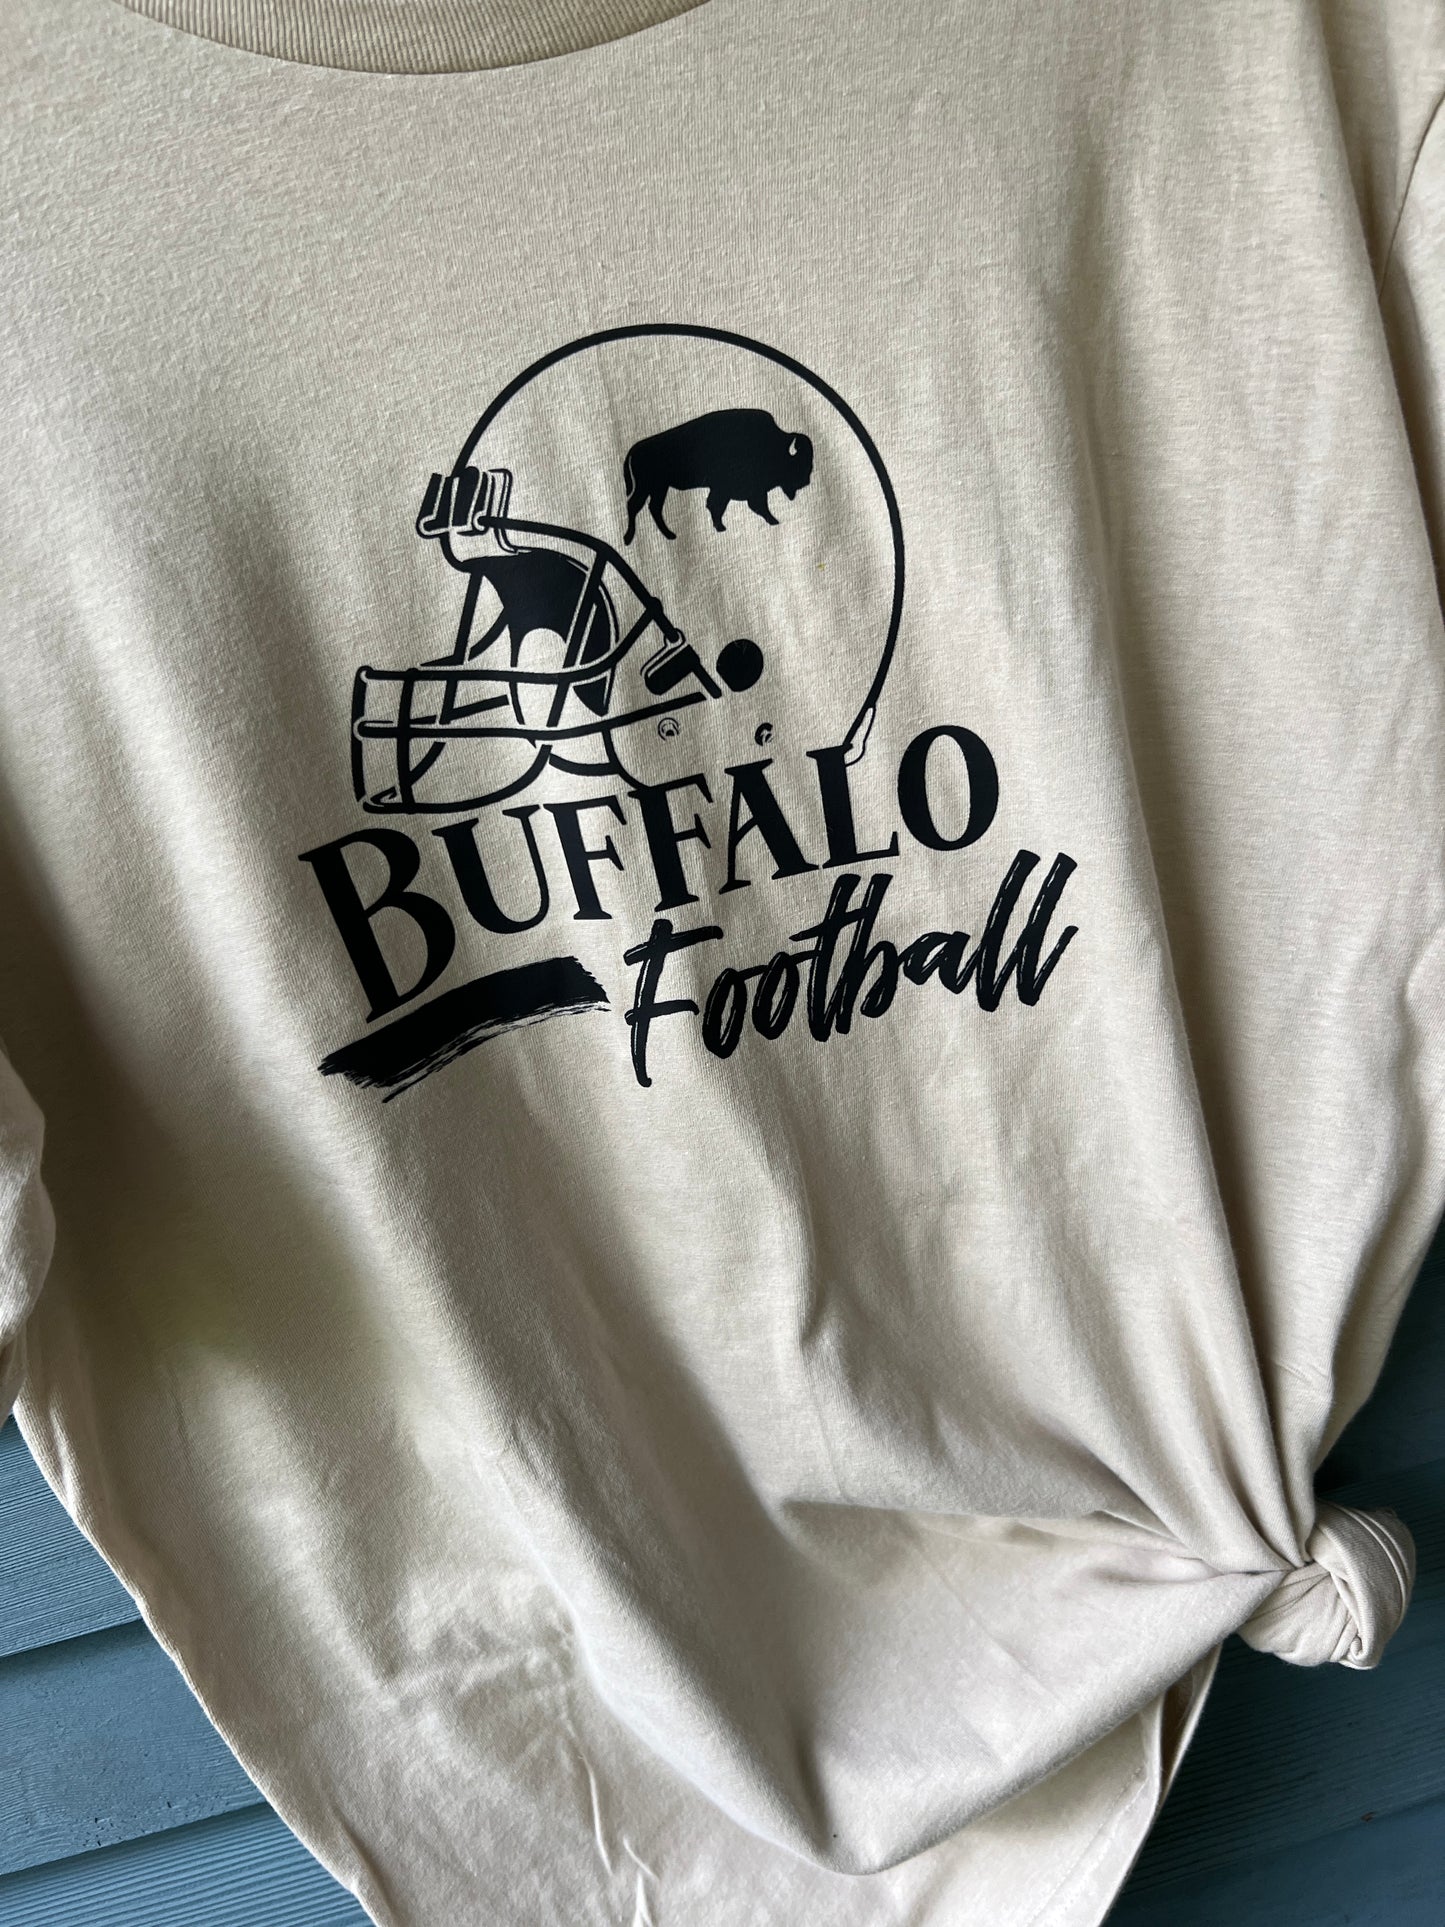 Buffalo football neutral tee